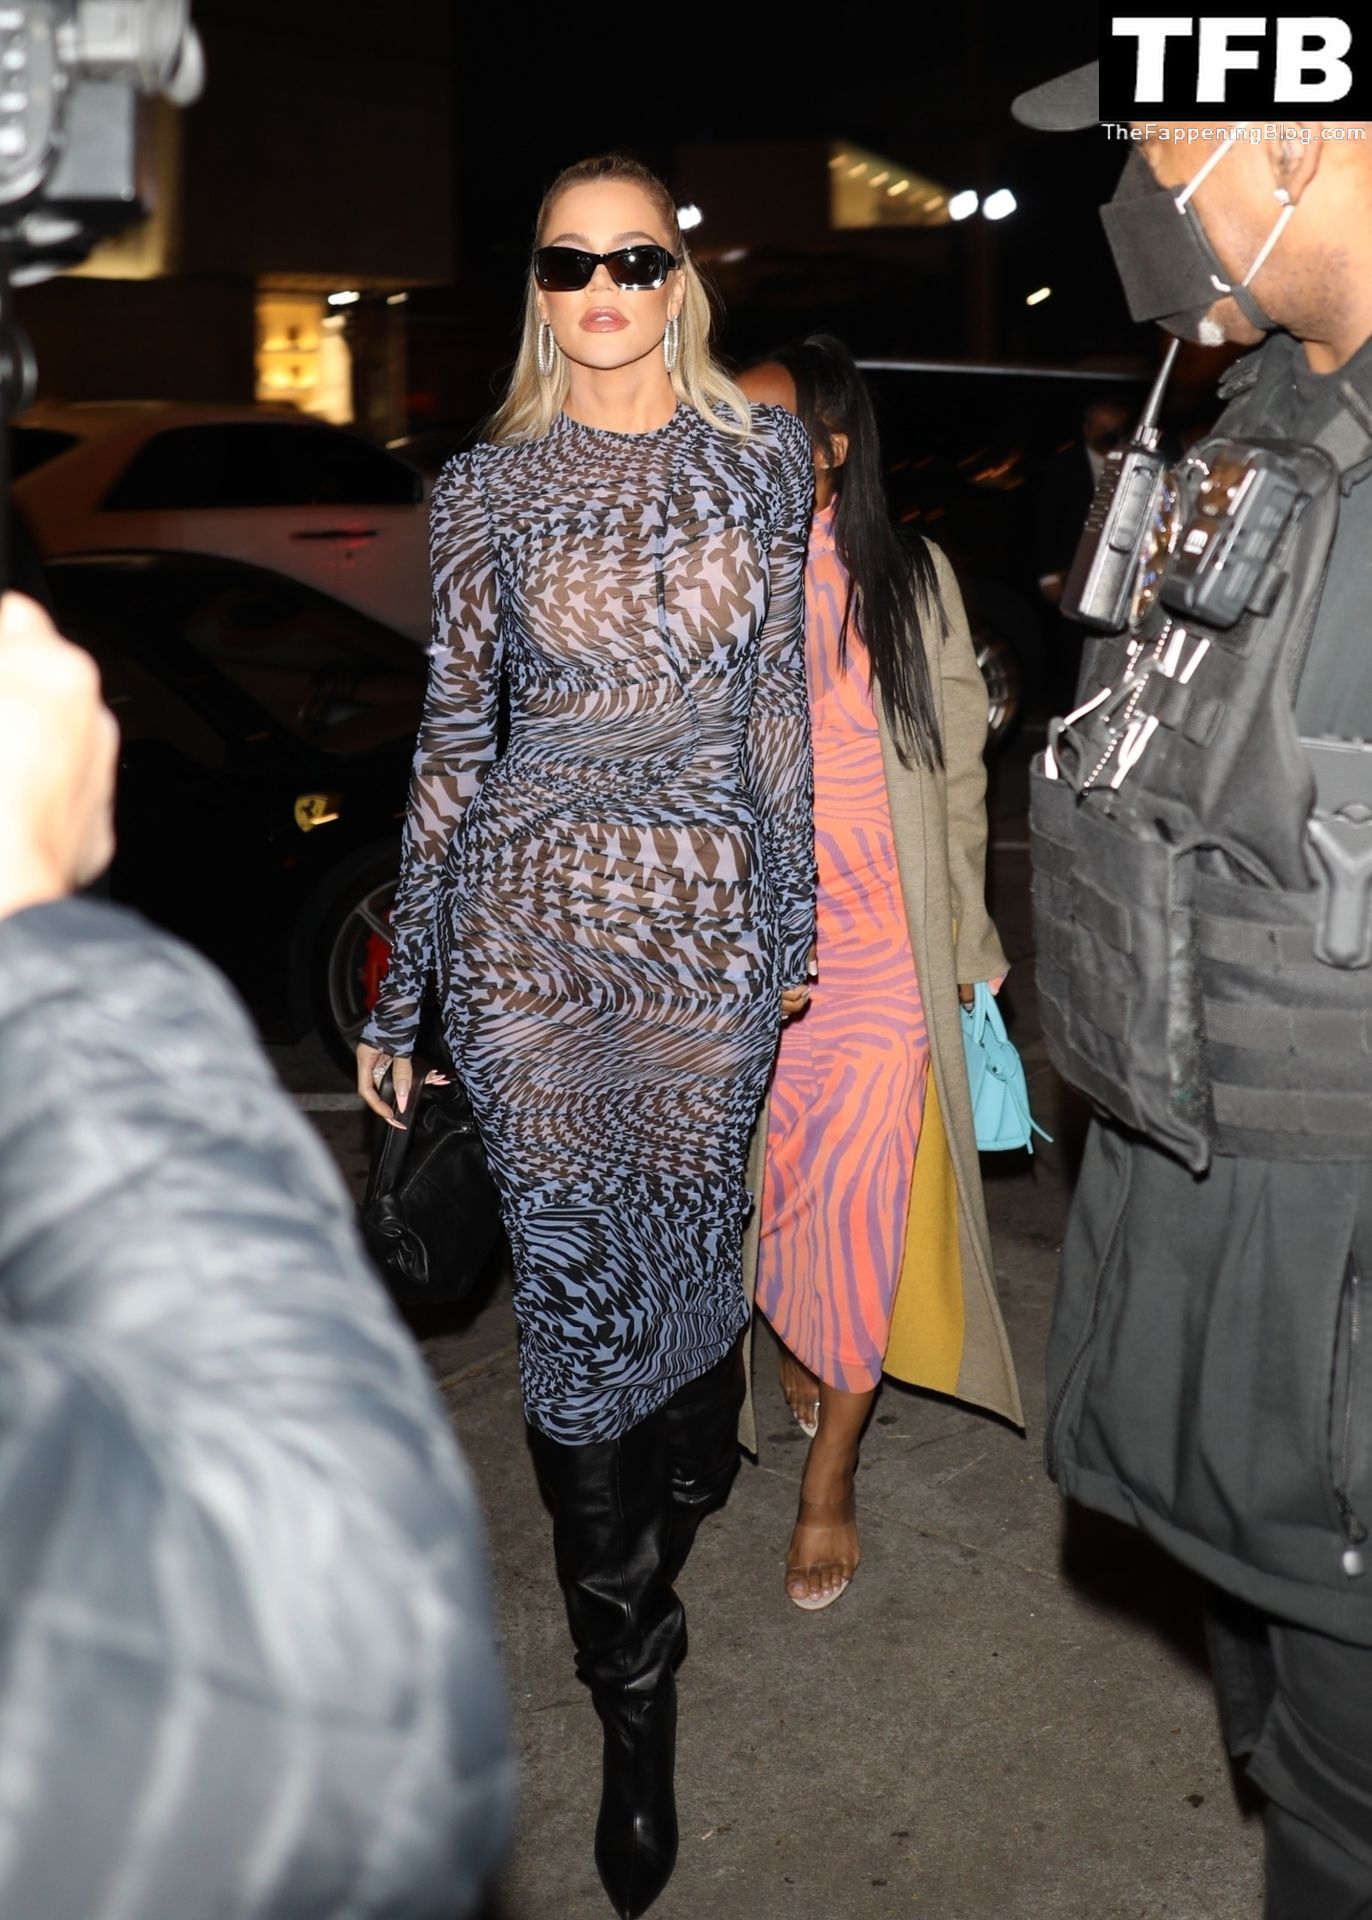 Khloe-Kardashian-See-Through-The-Fappening-Blog-42.jpg